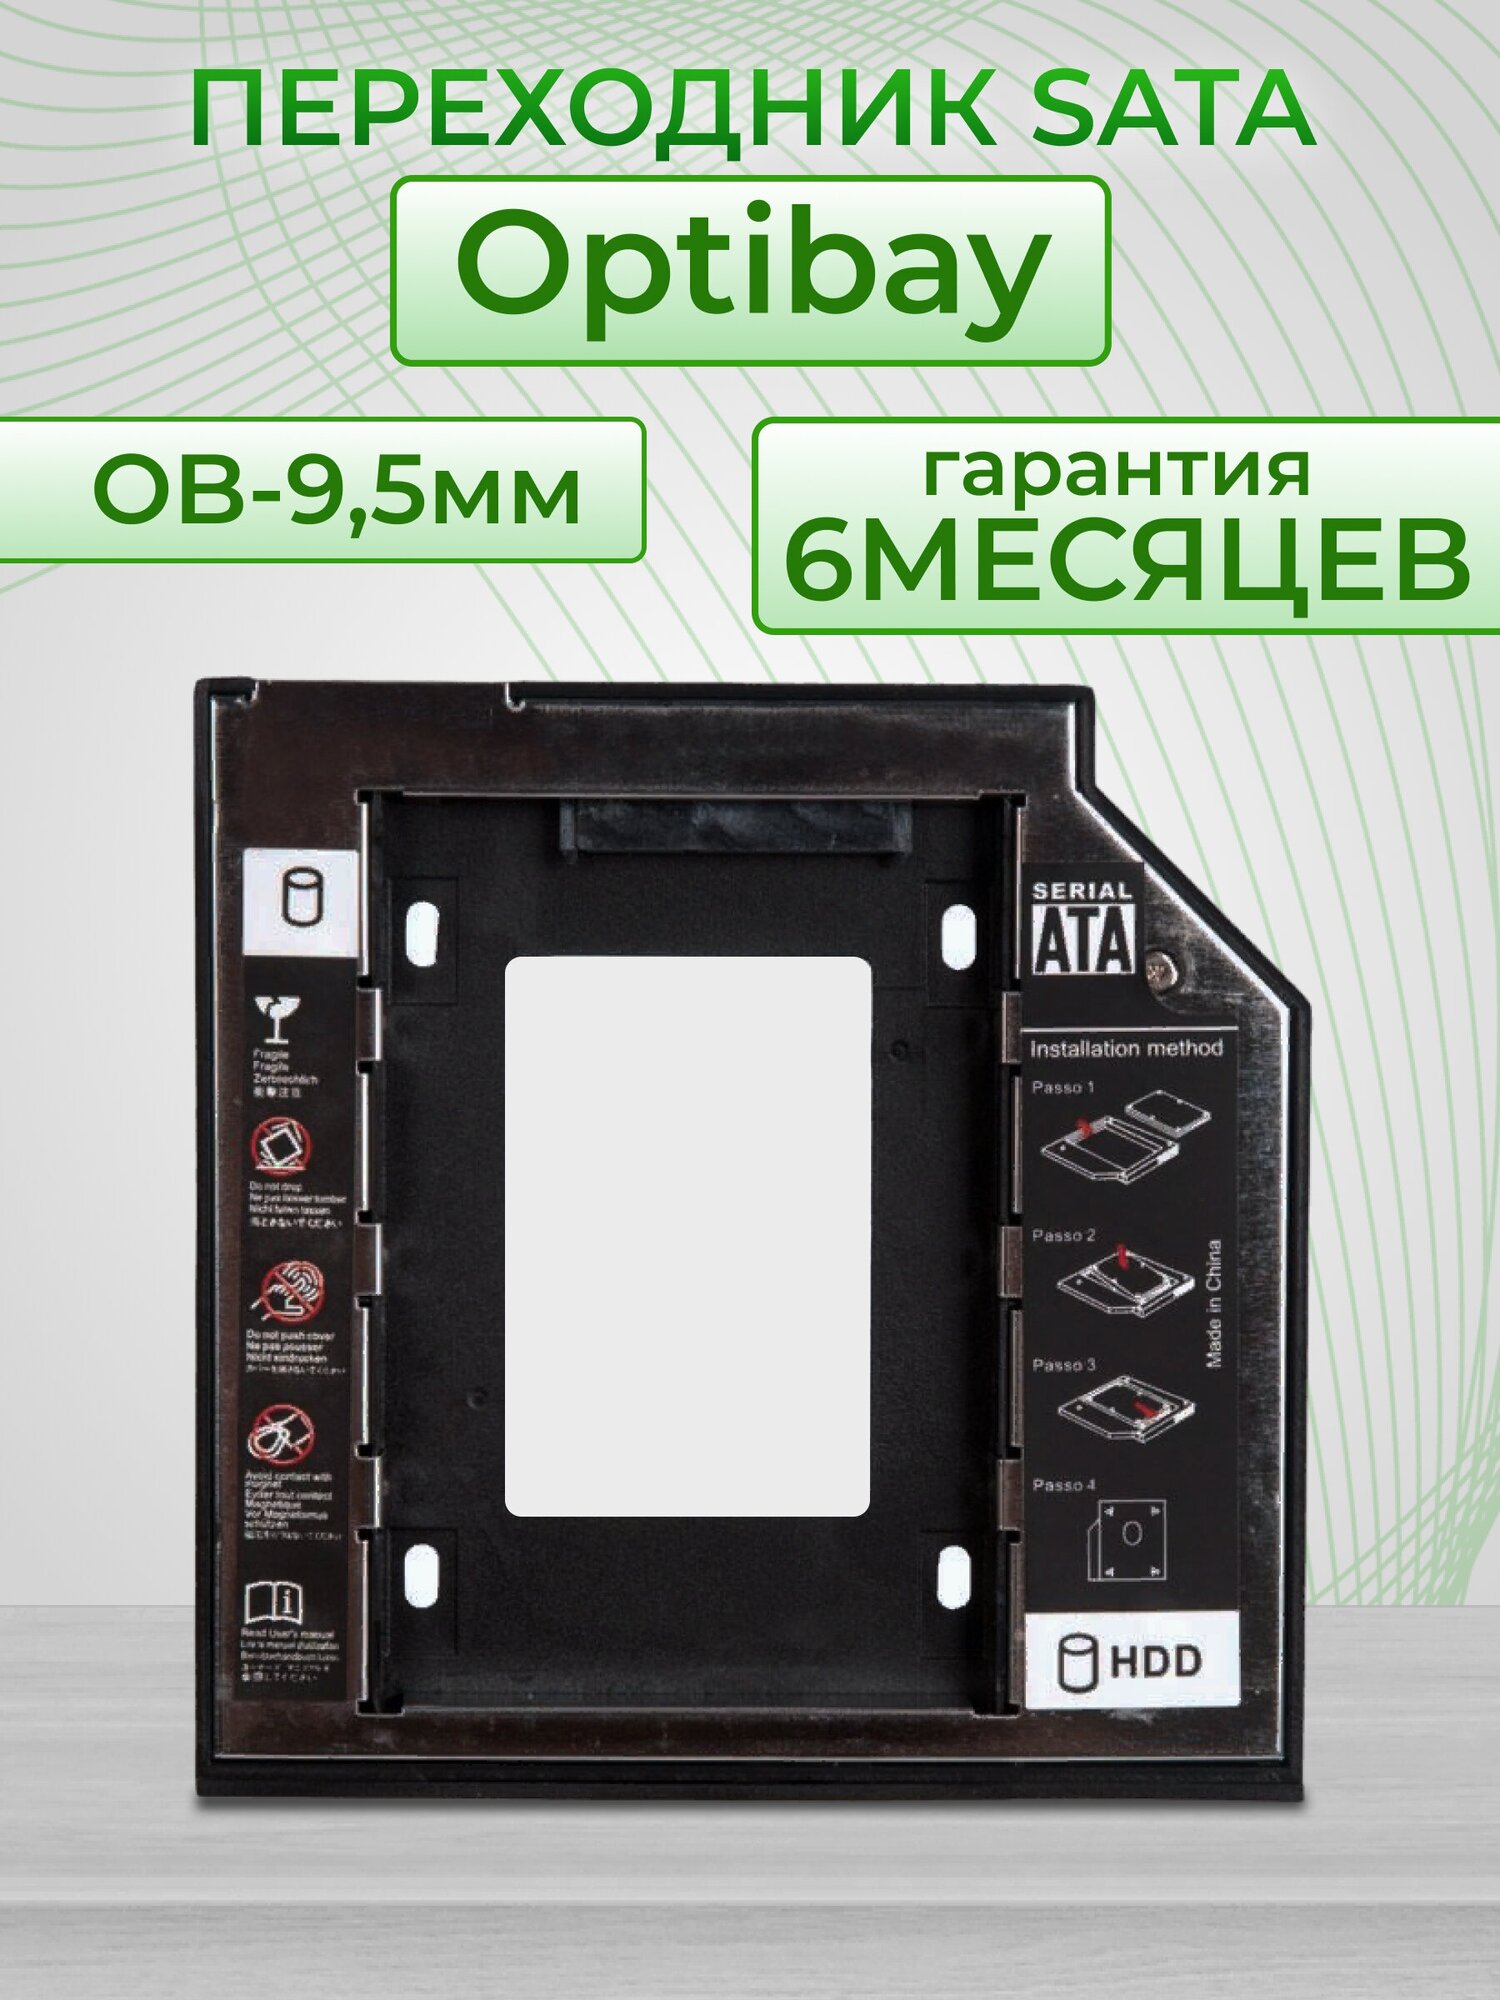 Optibay переходник SATA, Super Slim Int 9,5 мм